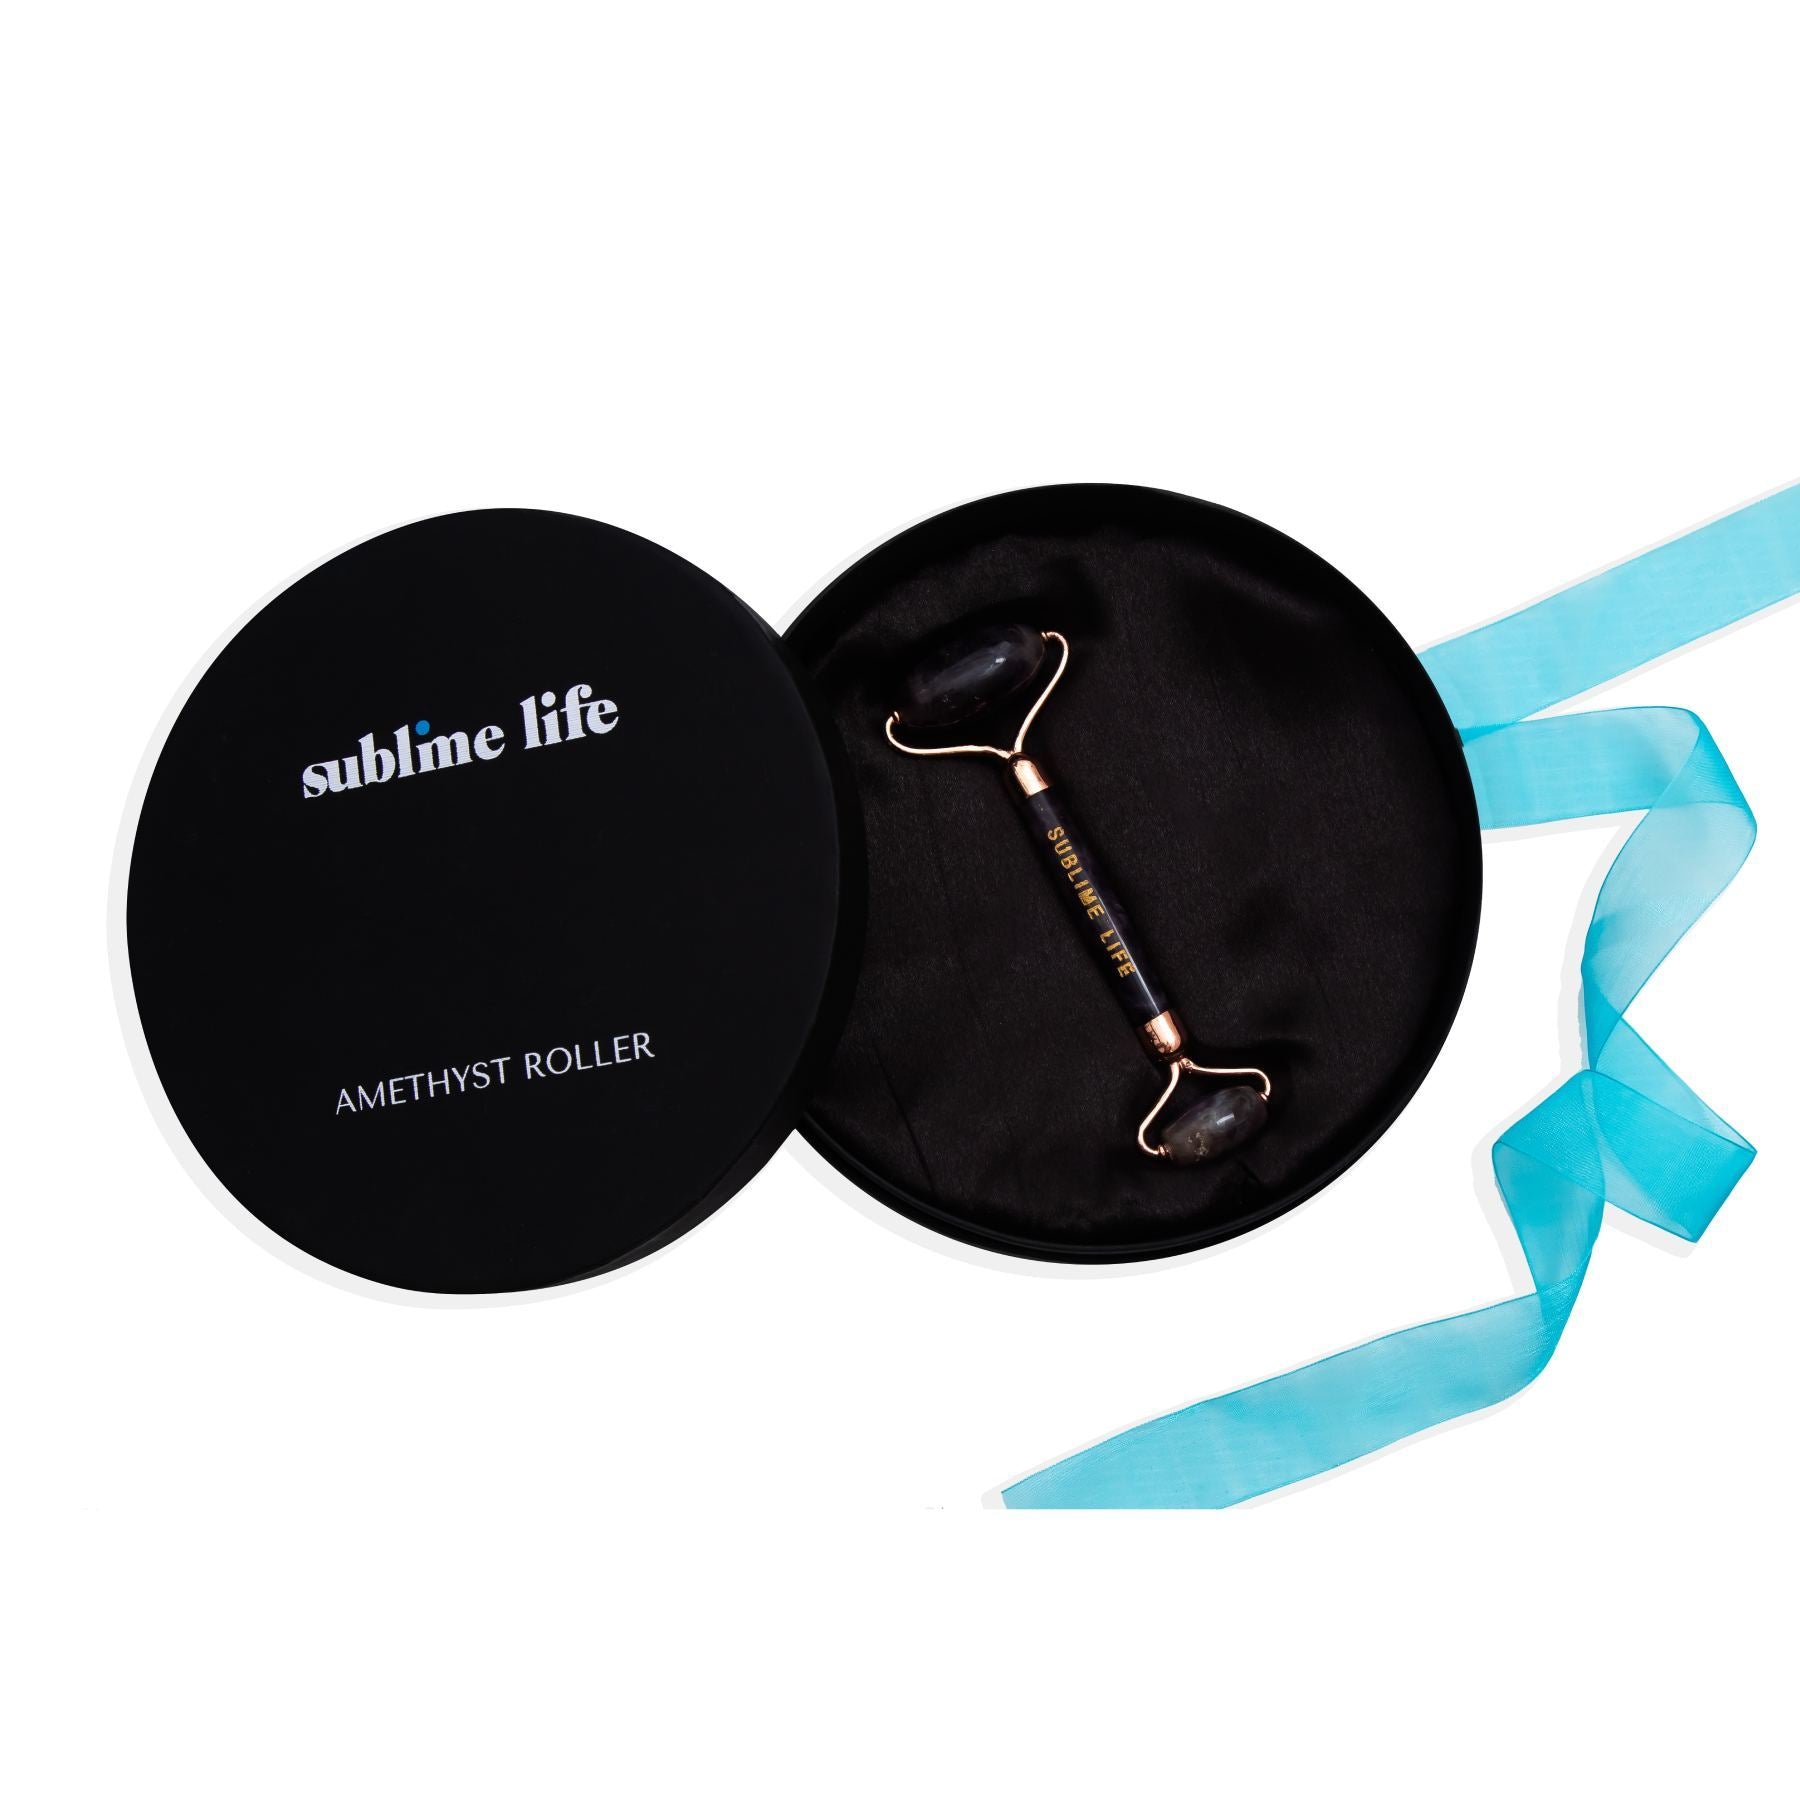 Shop Sublime Life Amethyst Roller on Sublime Life. Rejuvenates, Tightens and Brightens Skin